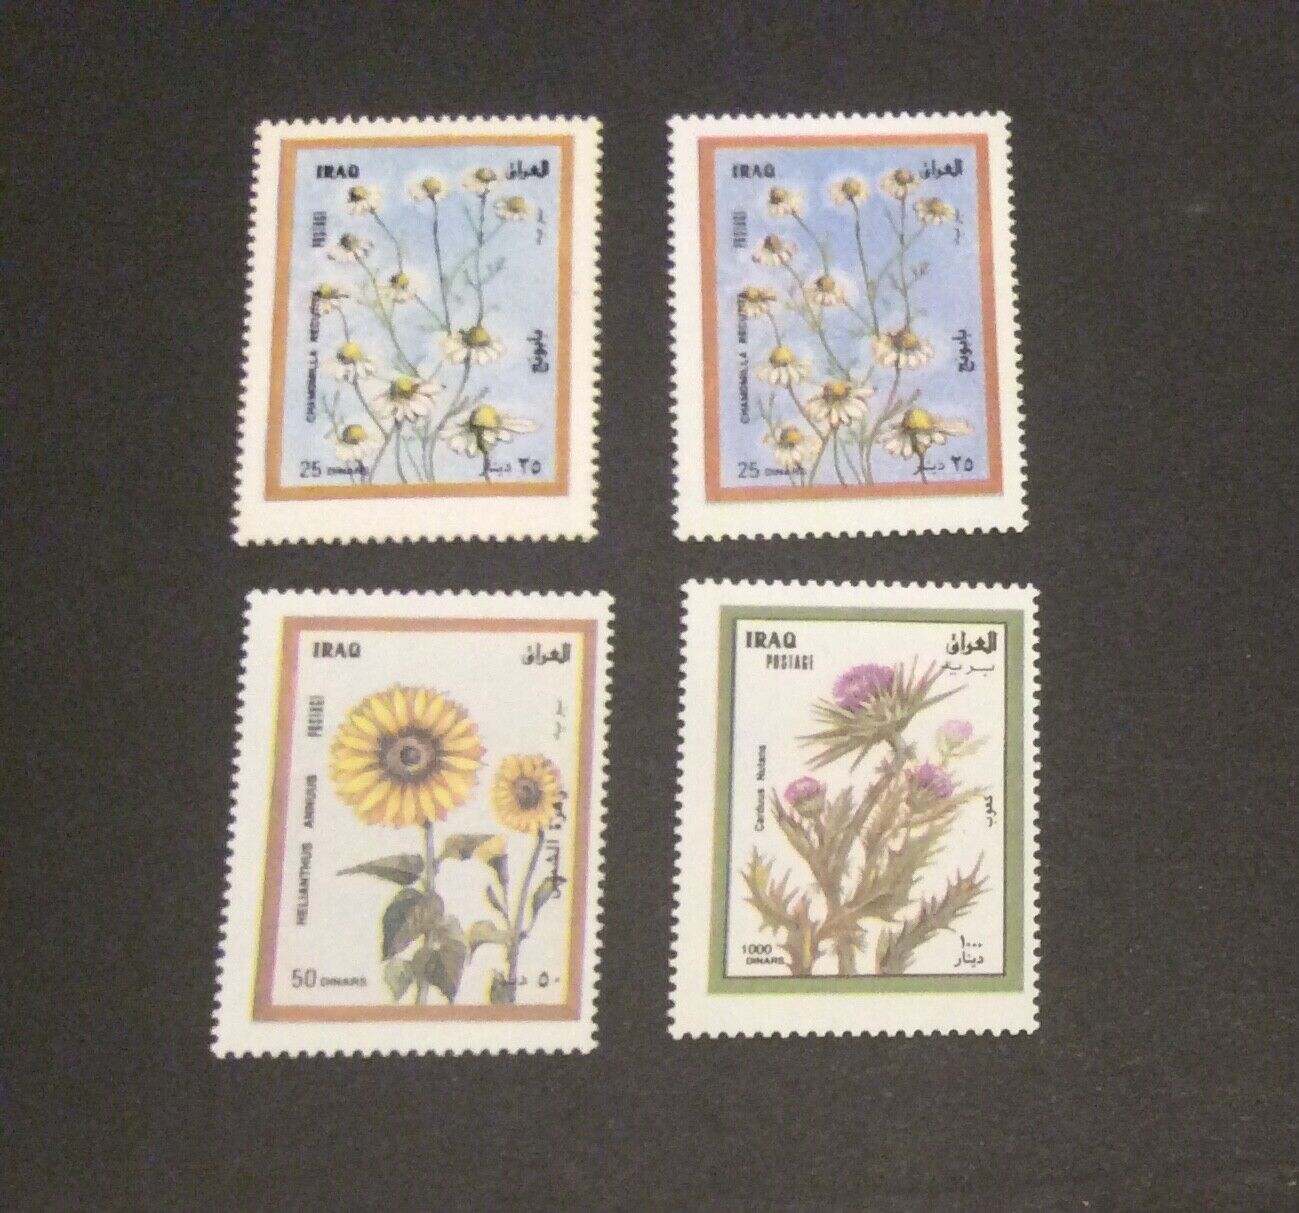 Iraq Stamp Flower 1998 MNH